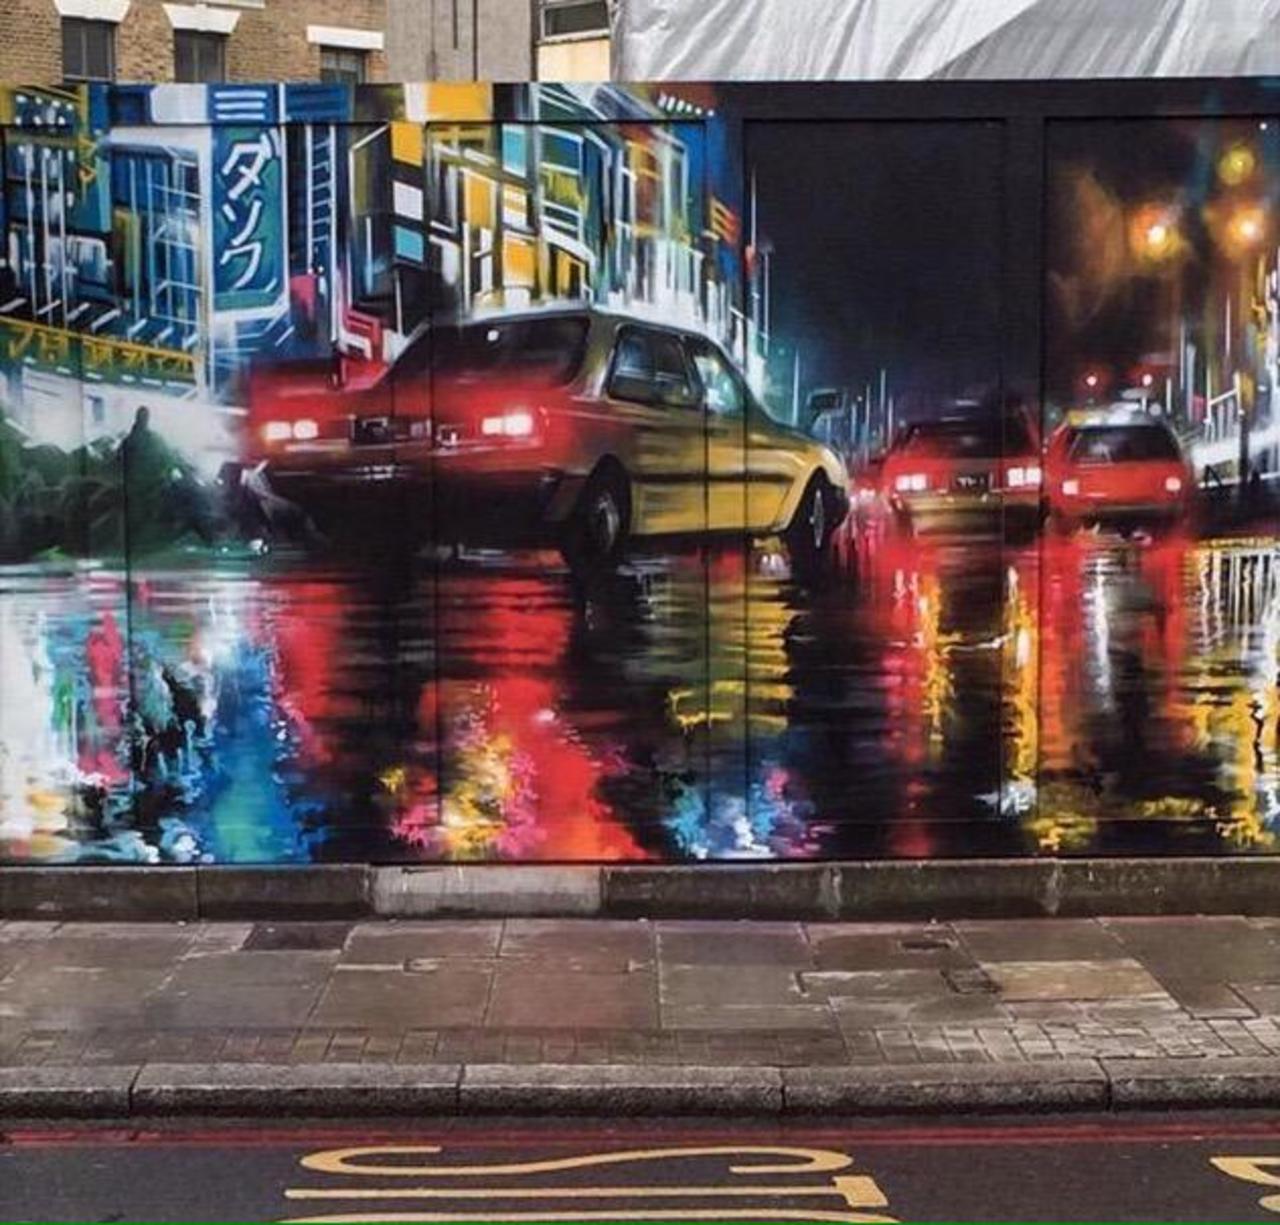 .@DanKitchener - Londres
#art #mural #graffiti #streetart https://t.co/Cg3iLOz0XW
Via @GoogleStreetArt